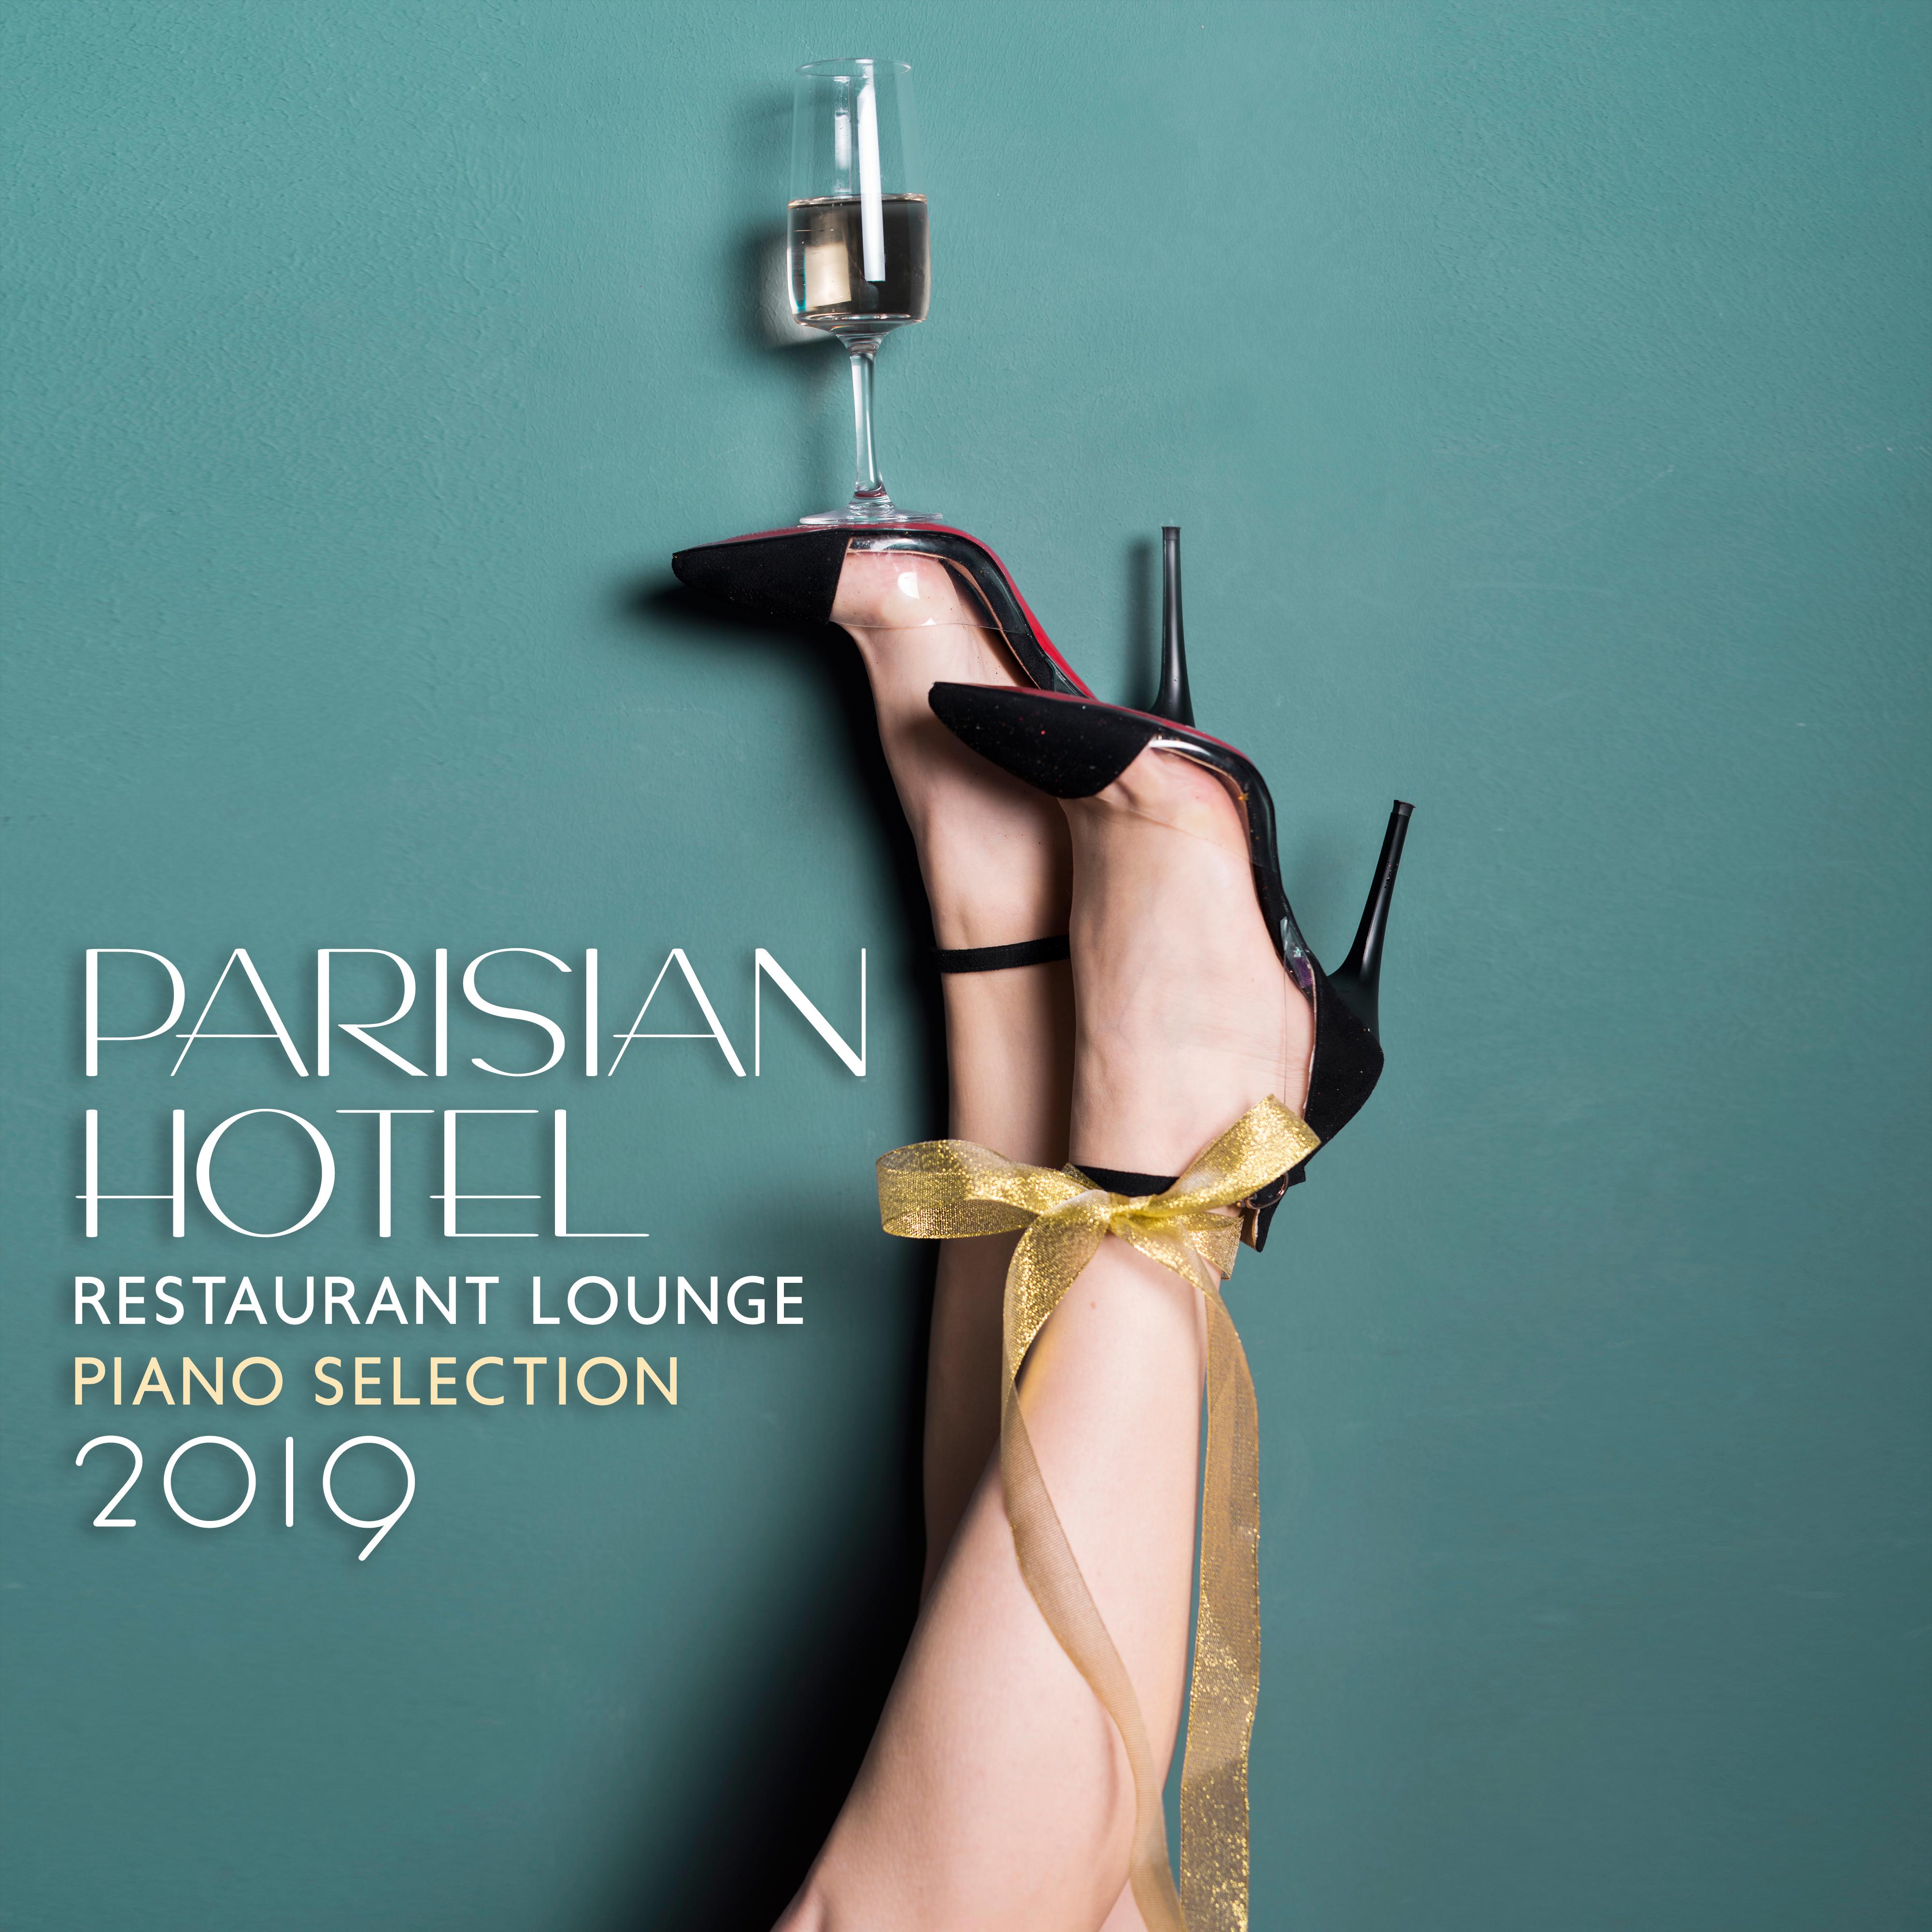 Parisian Hotel Restaurant Lounge Piano Selection 2019